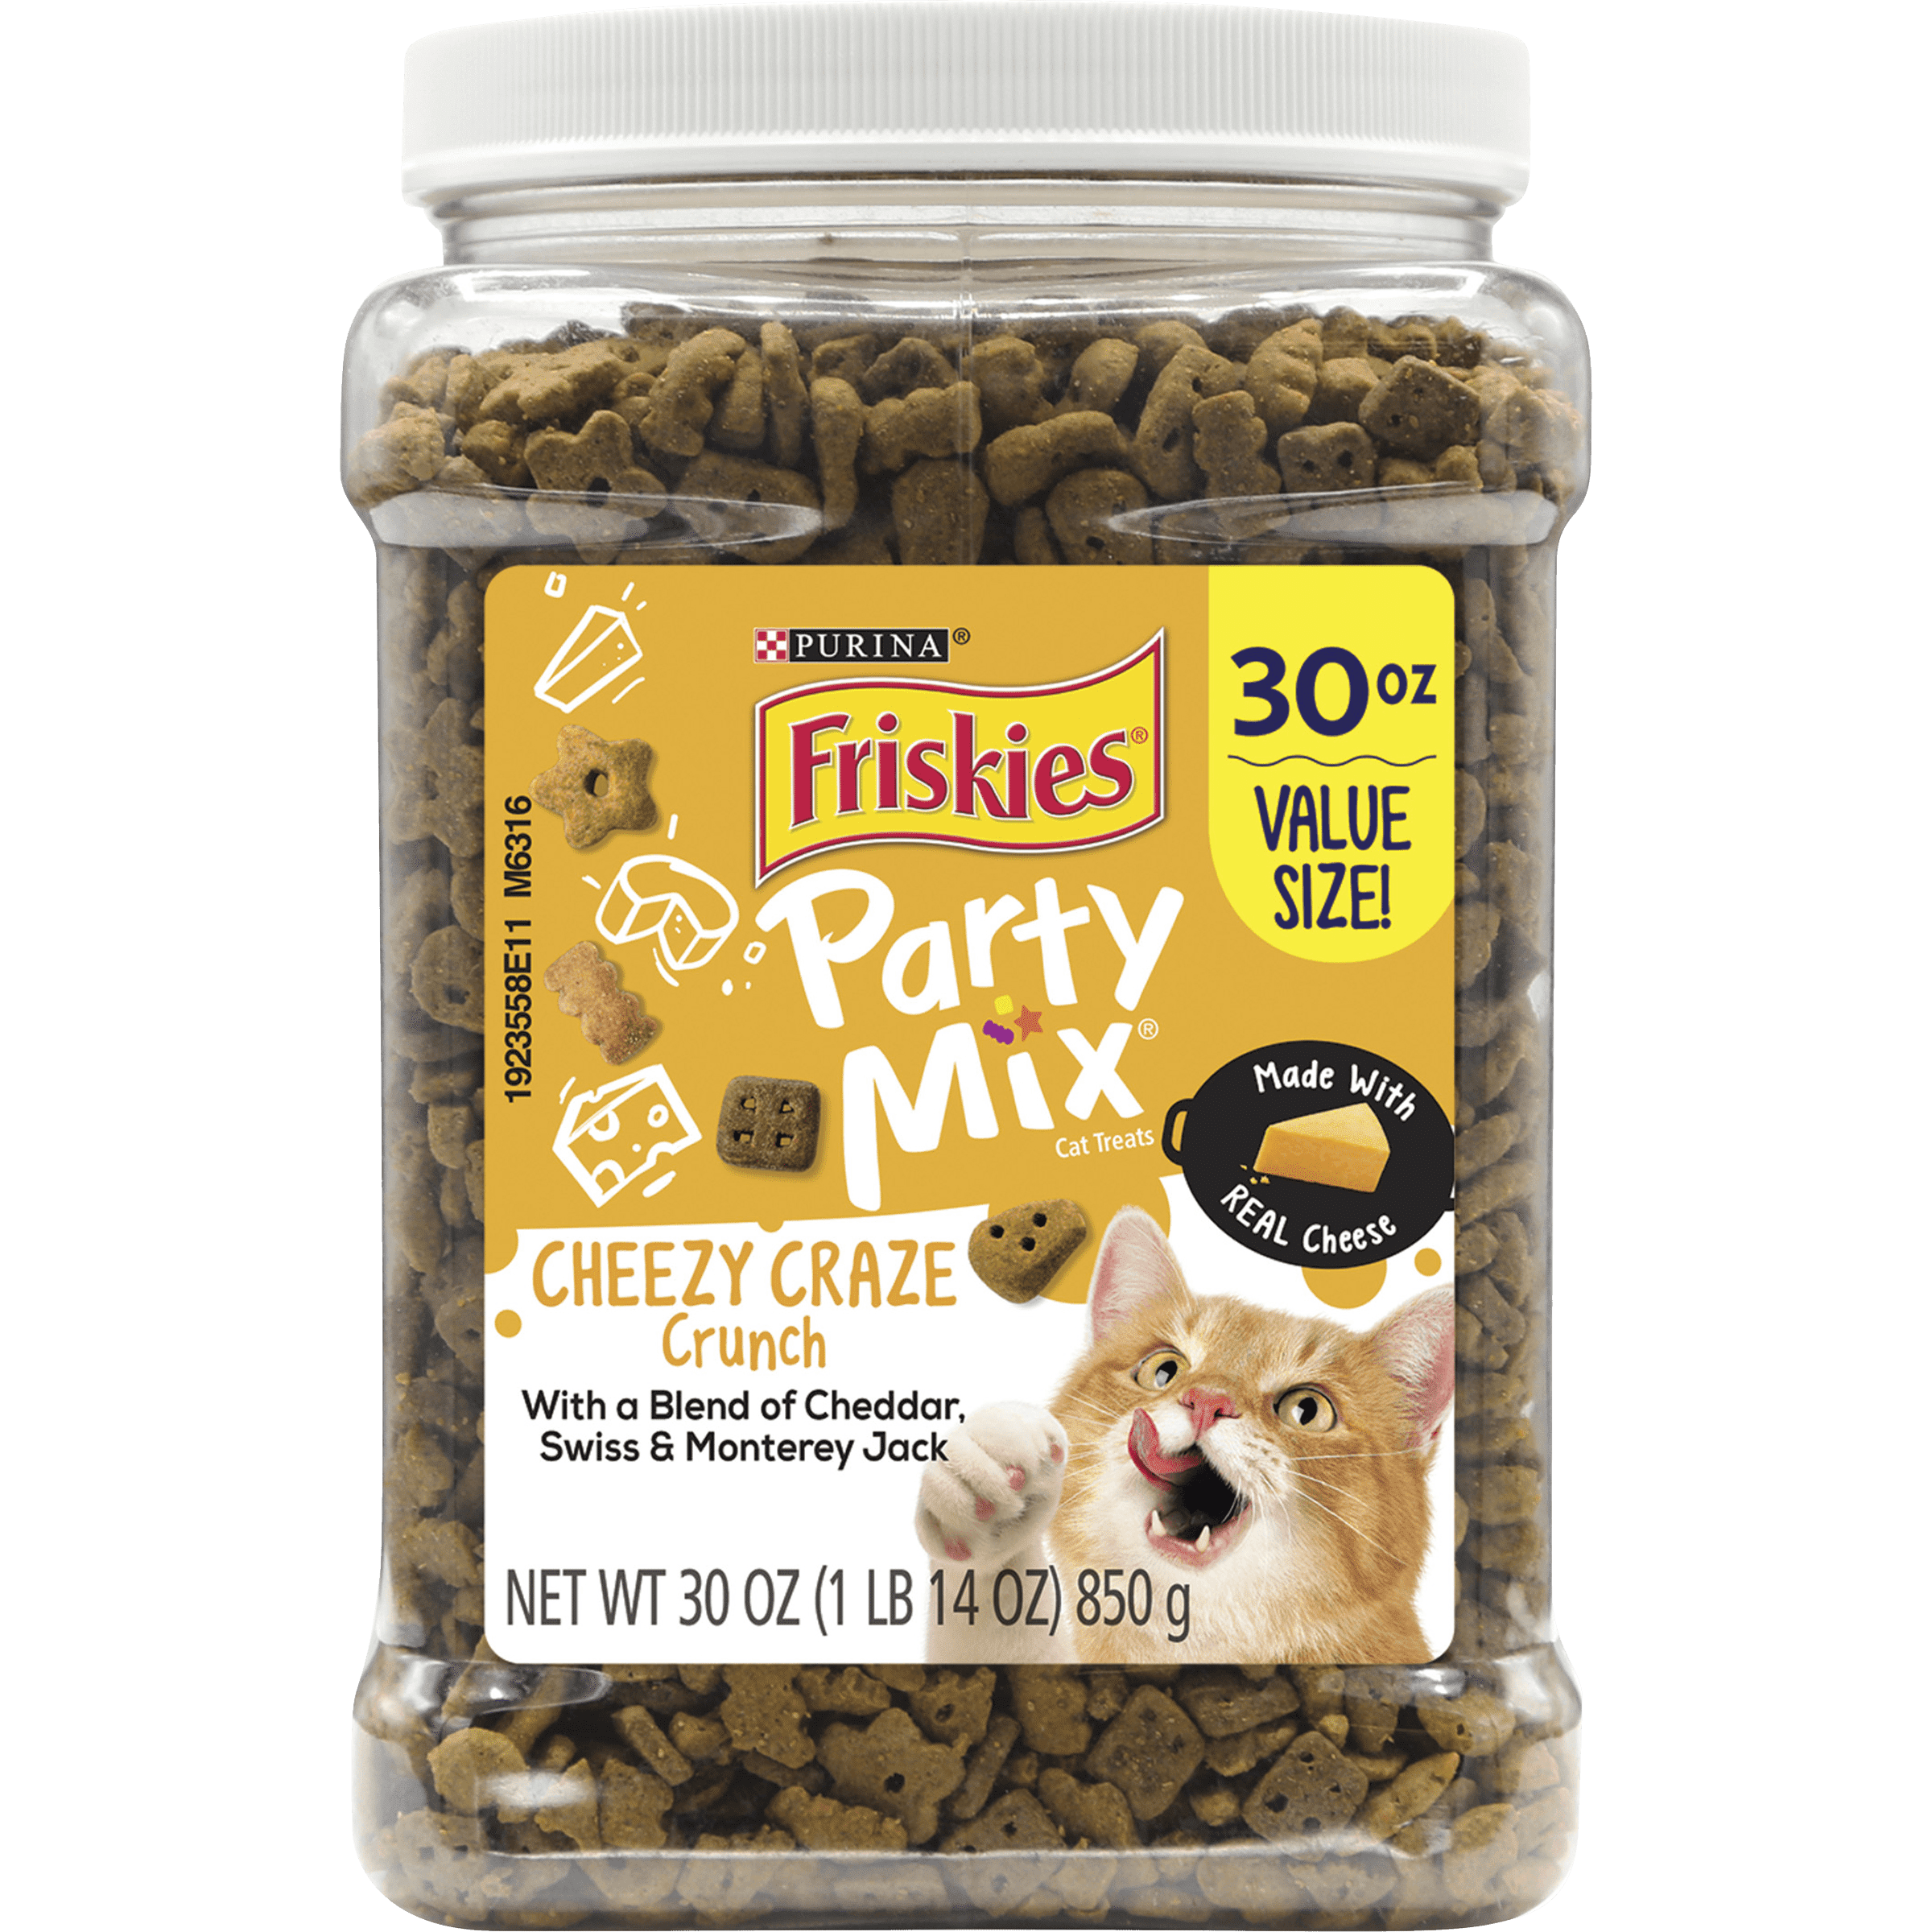 Friskies Cat Treats, Party Mix Cheezy Craze Crunch 30 oz. Canister